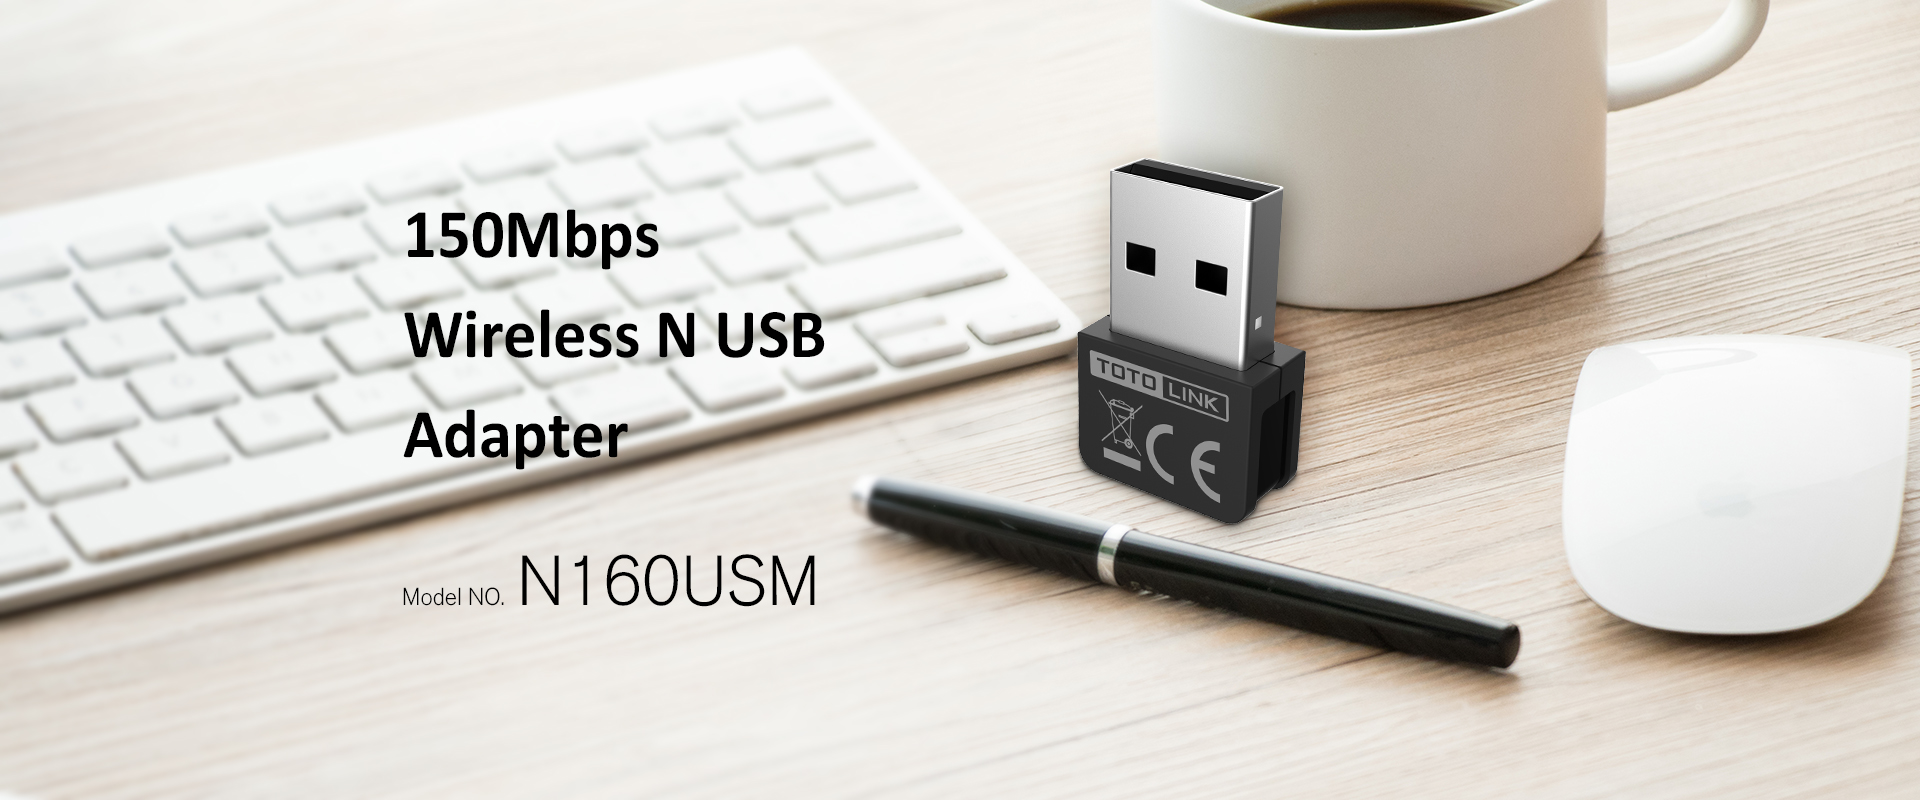  N160USM-150Mbps-Wireless-N-USB-adapter